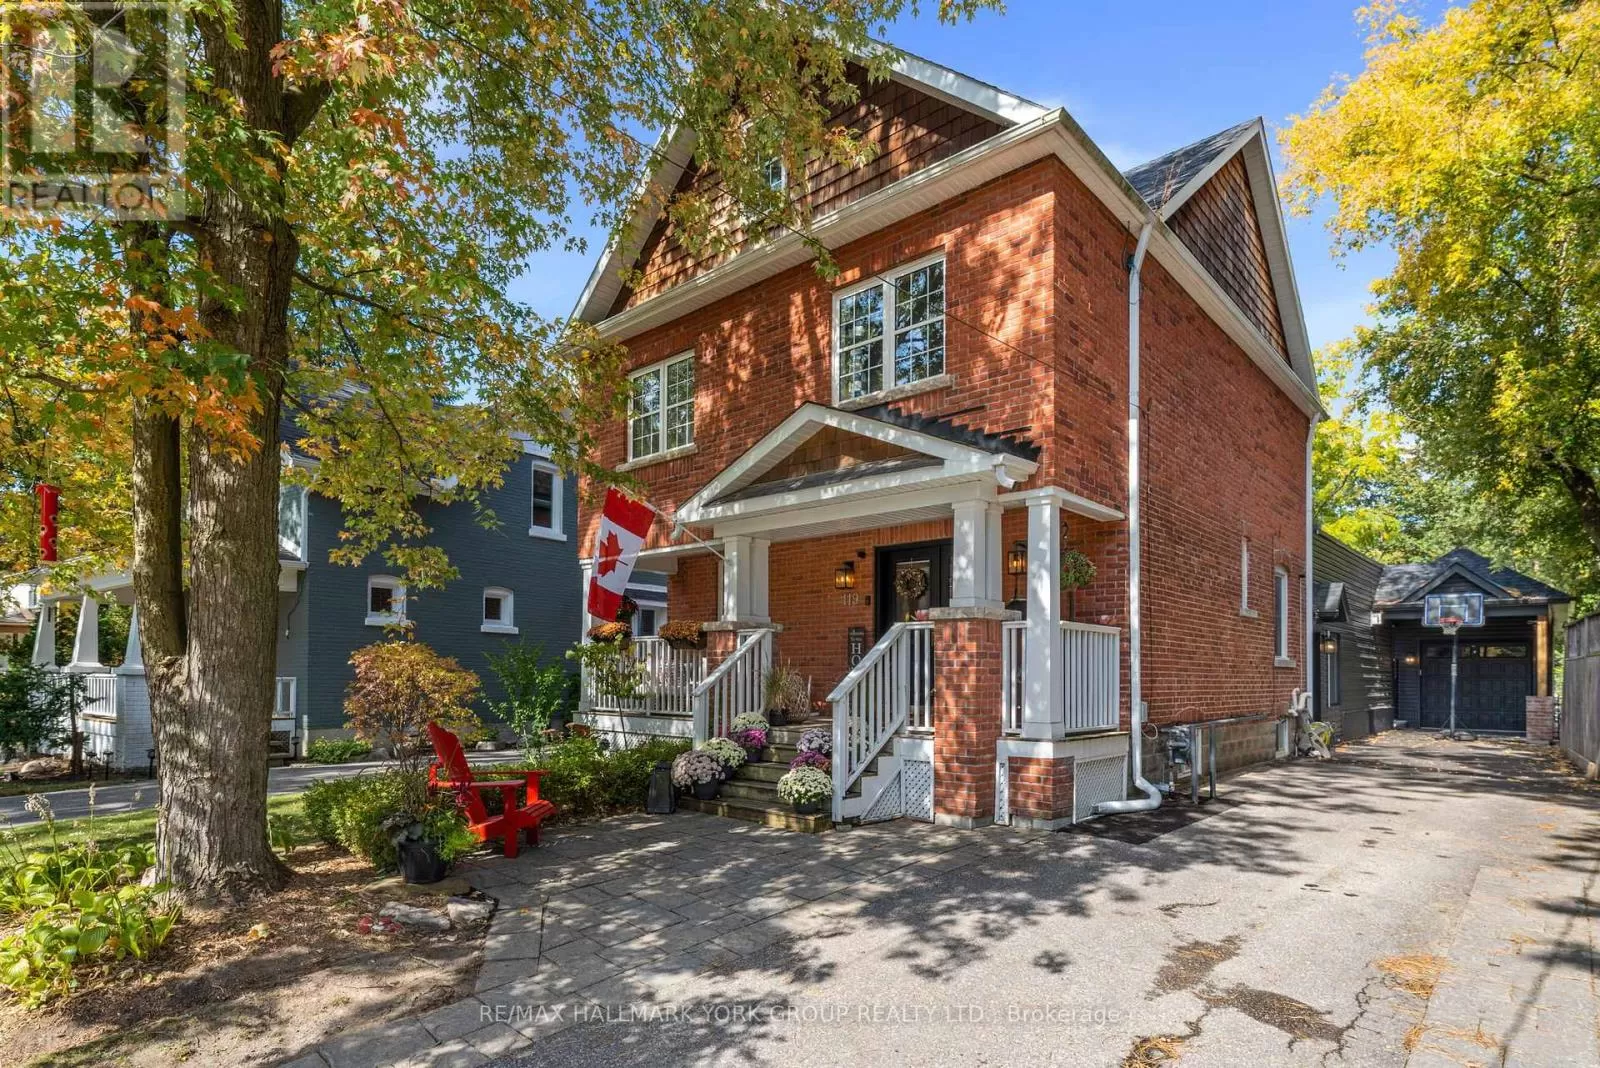 House for rent: 119 Richmond Street, Richmond Hill, Ontario L4C 3Y6